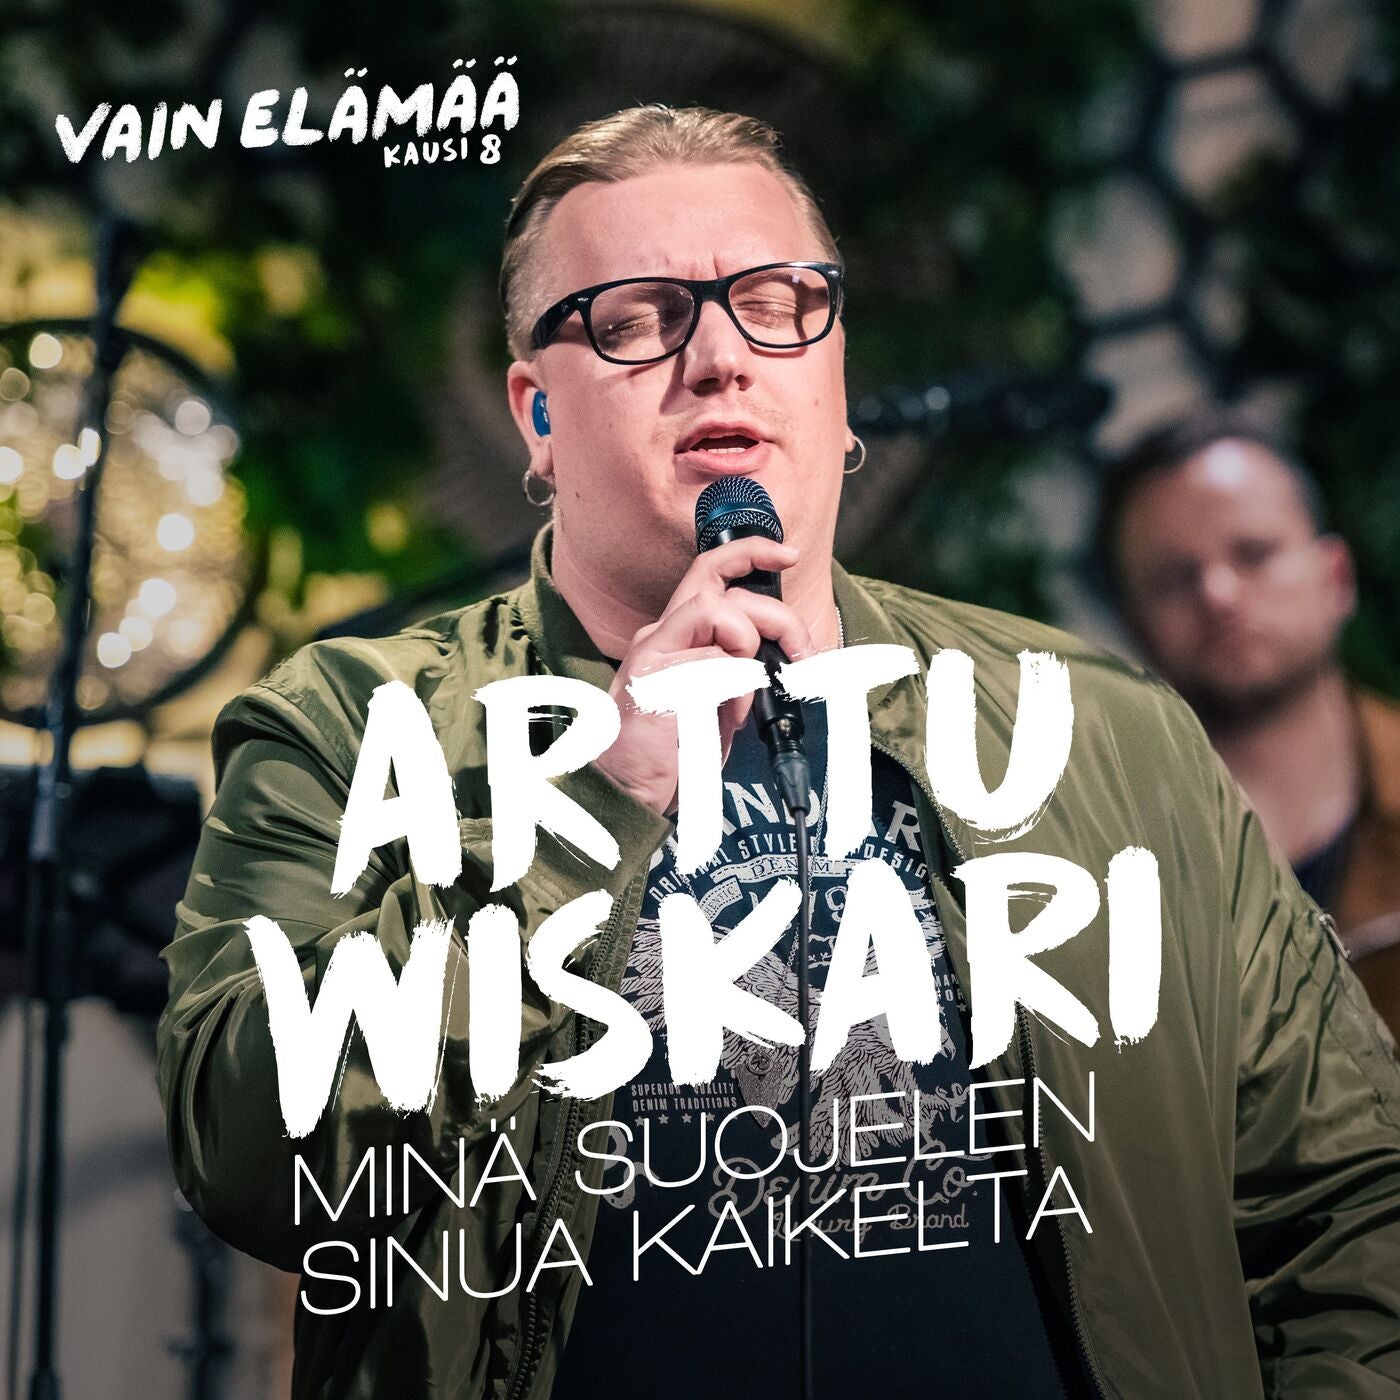 Suomen muotoisen pilven alla by Arttu Wiskari on Beatsource